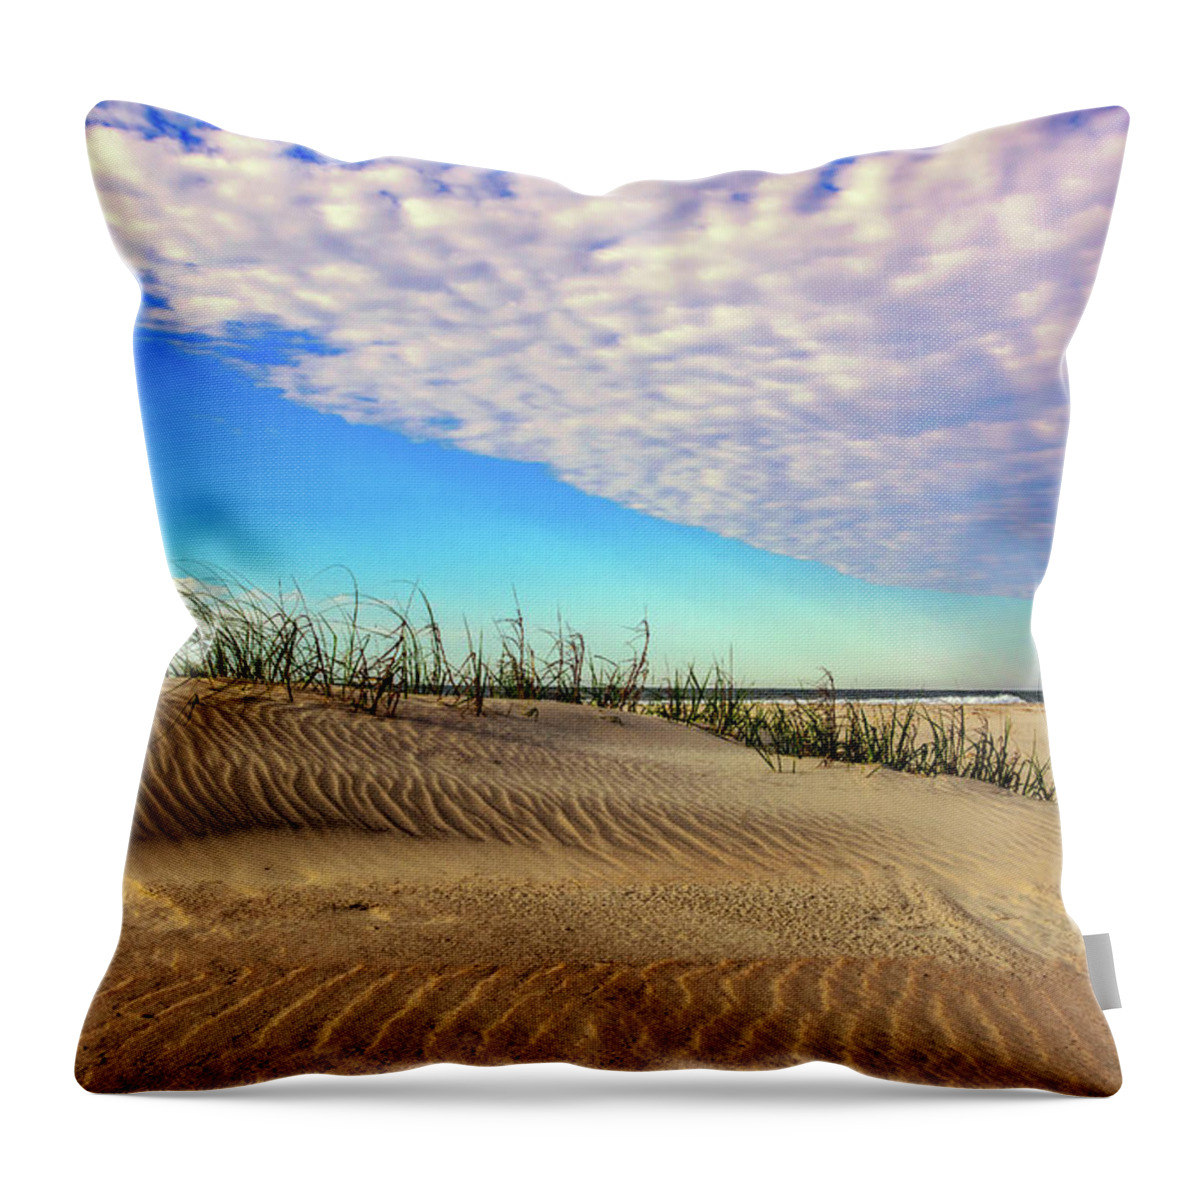 Dunes Prints Throw Pillow featuring the photograph Dunes by John Harding